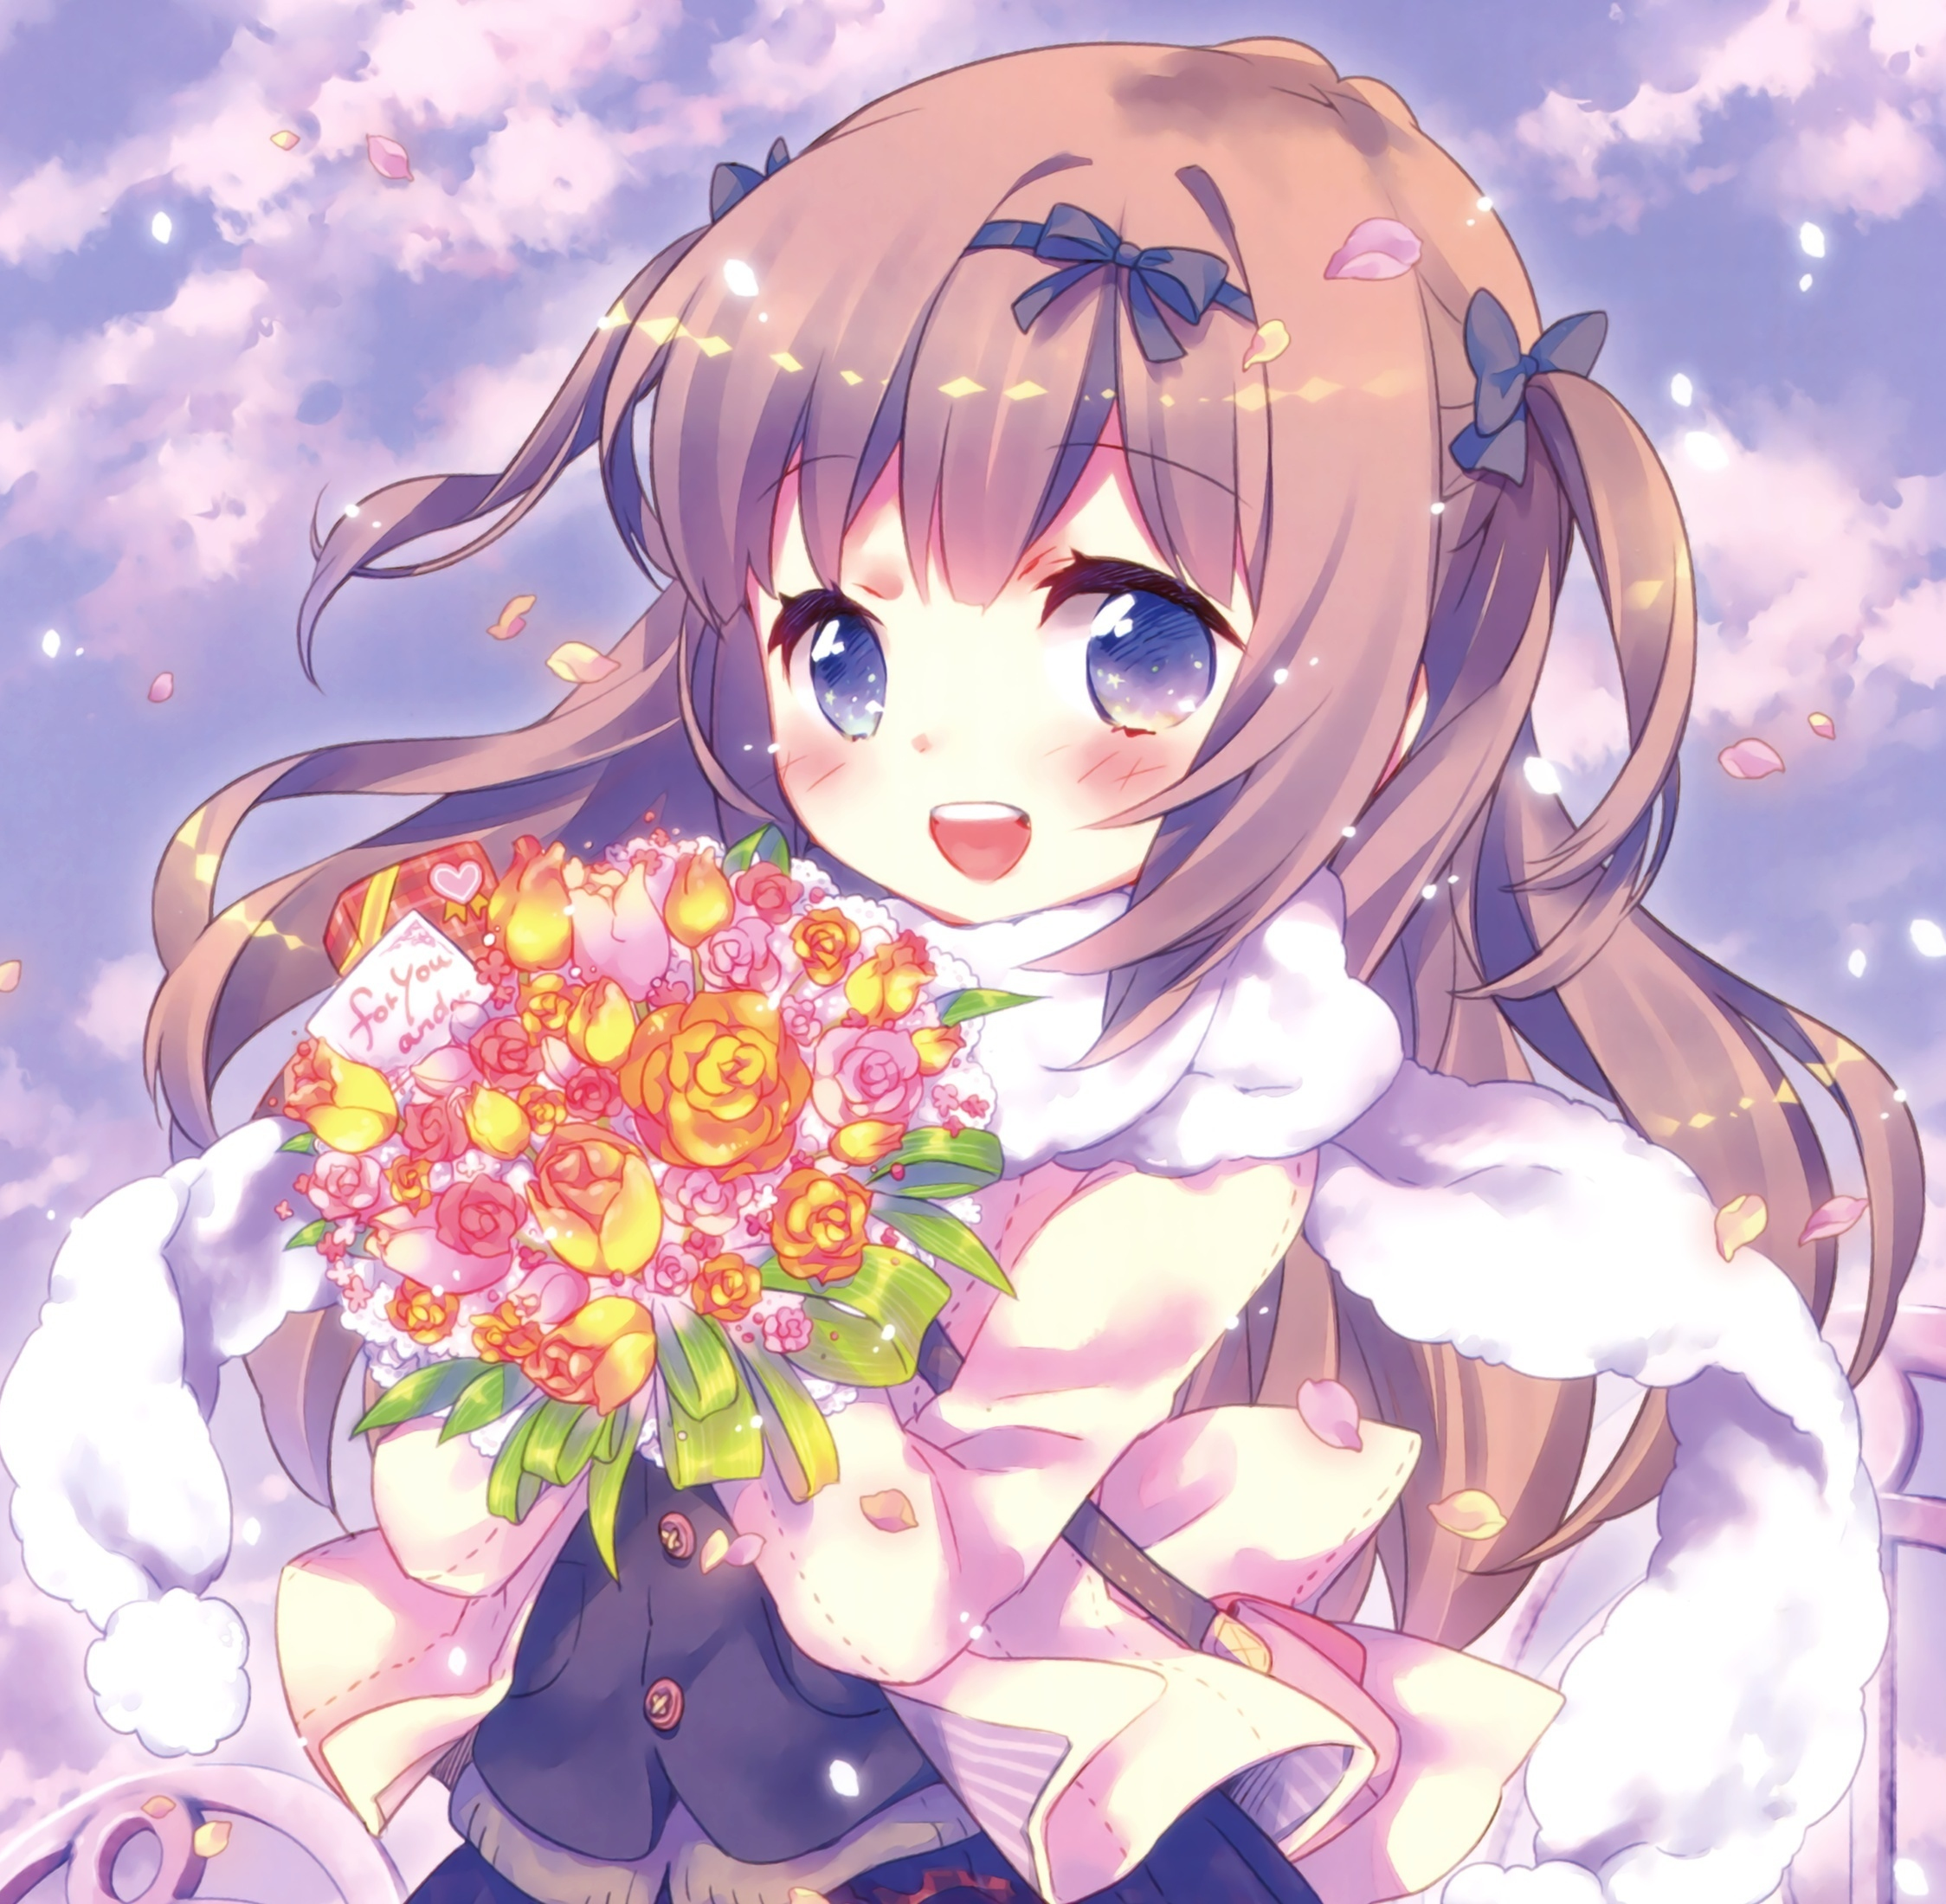 Download 2248x2248 Wallpaper Anime Girl Cute Flowers Bouquet